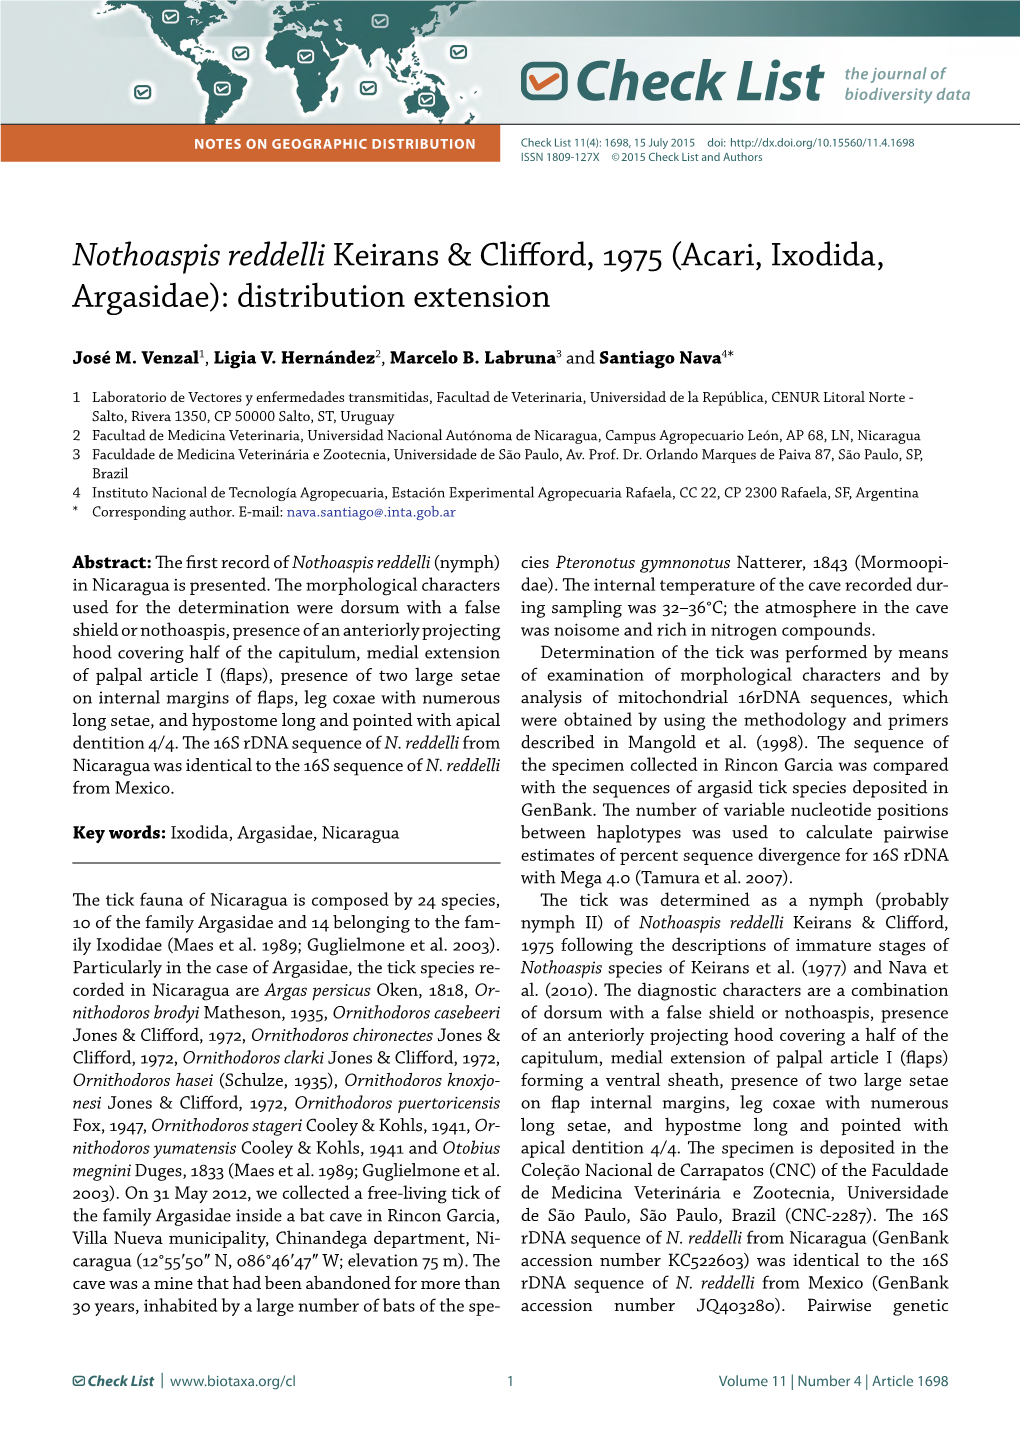 Nothoaspis Reddelli Keirans & Clifford, 1975 (Acari, Ixodida, Argasidae): Distribution Extension